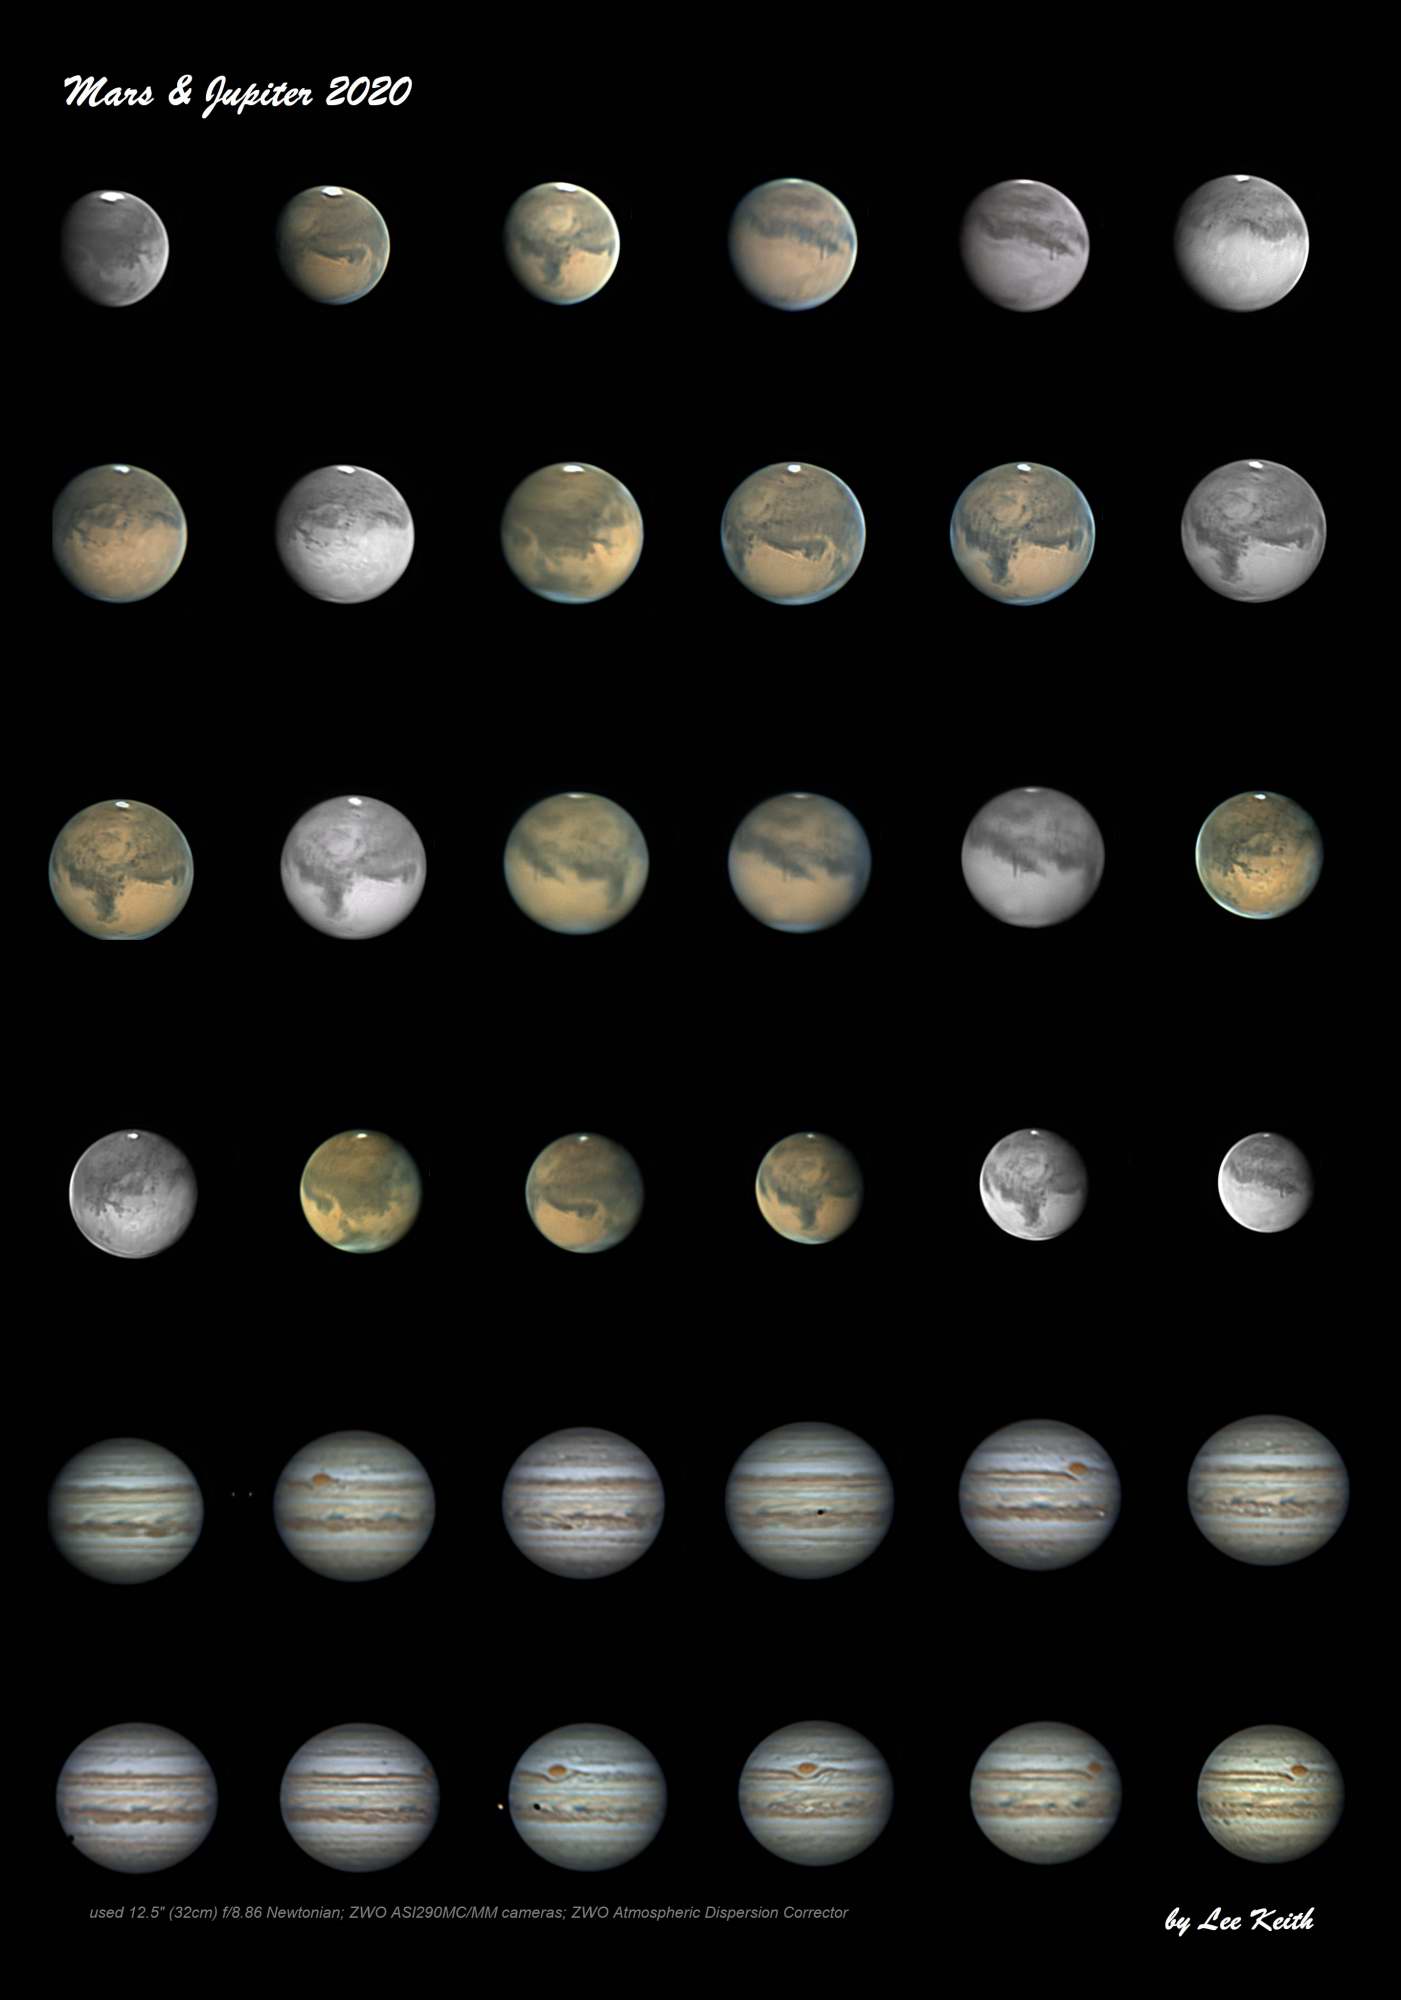 Mars-Jupiter Collage - 2020 by Lee Keith 